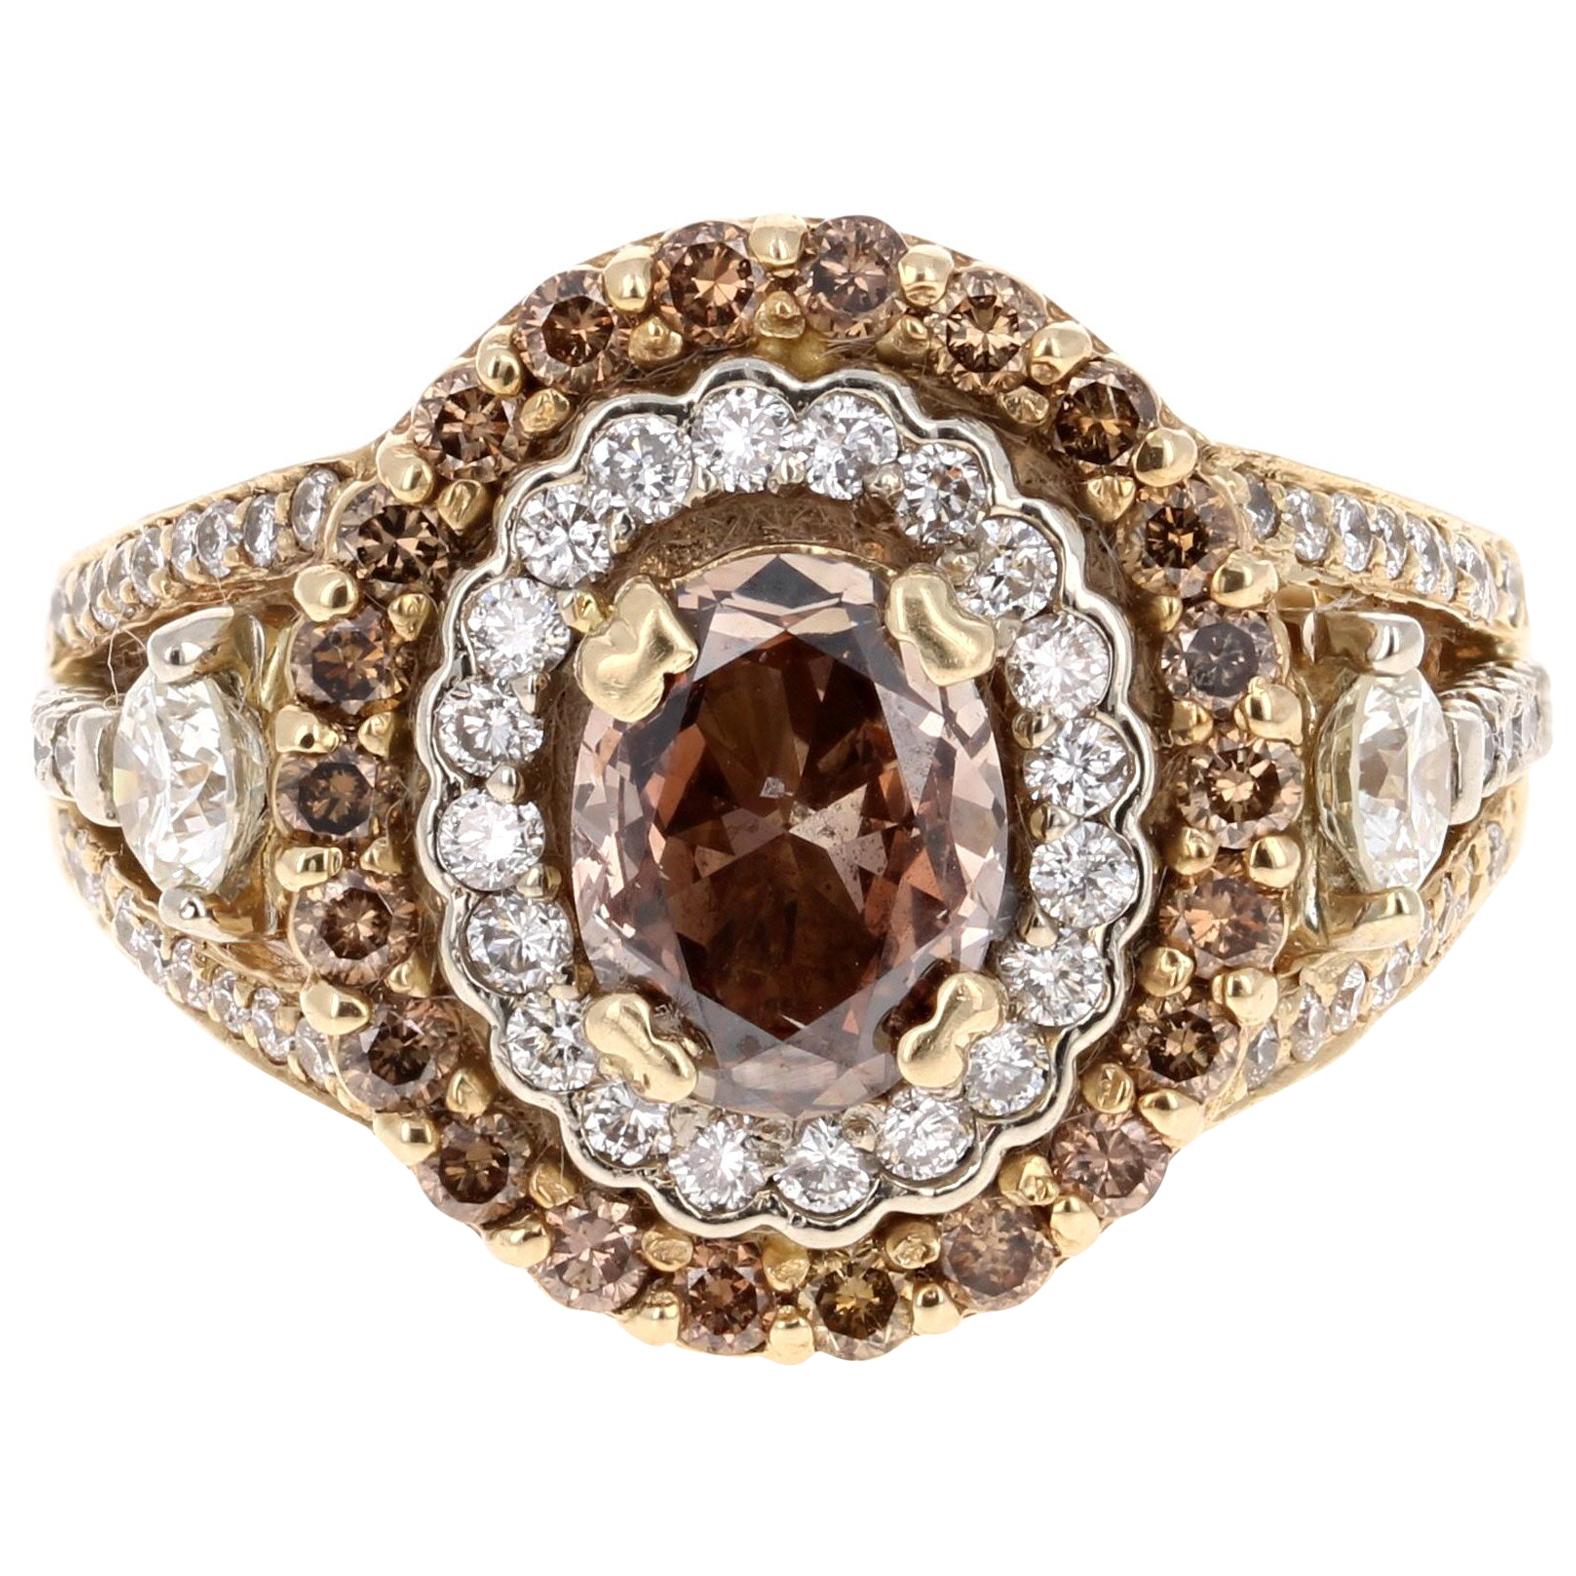 2.09 Carat Fancy Brown Natural Diamond Engagement Ring